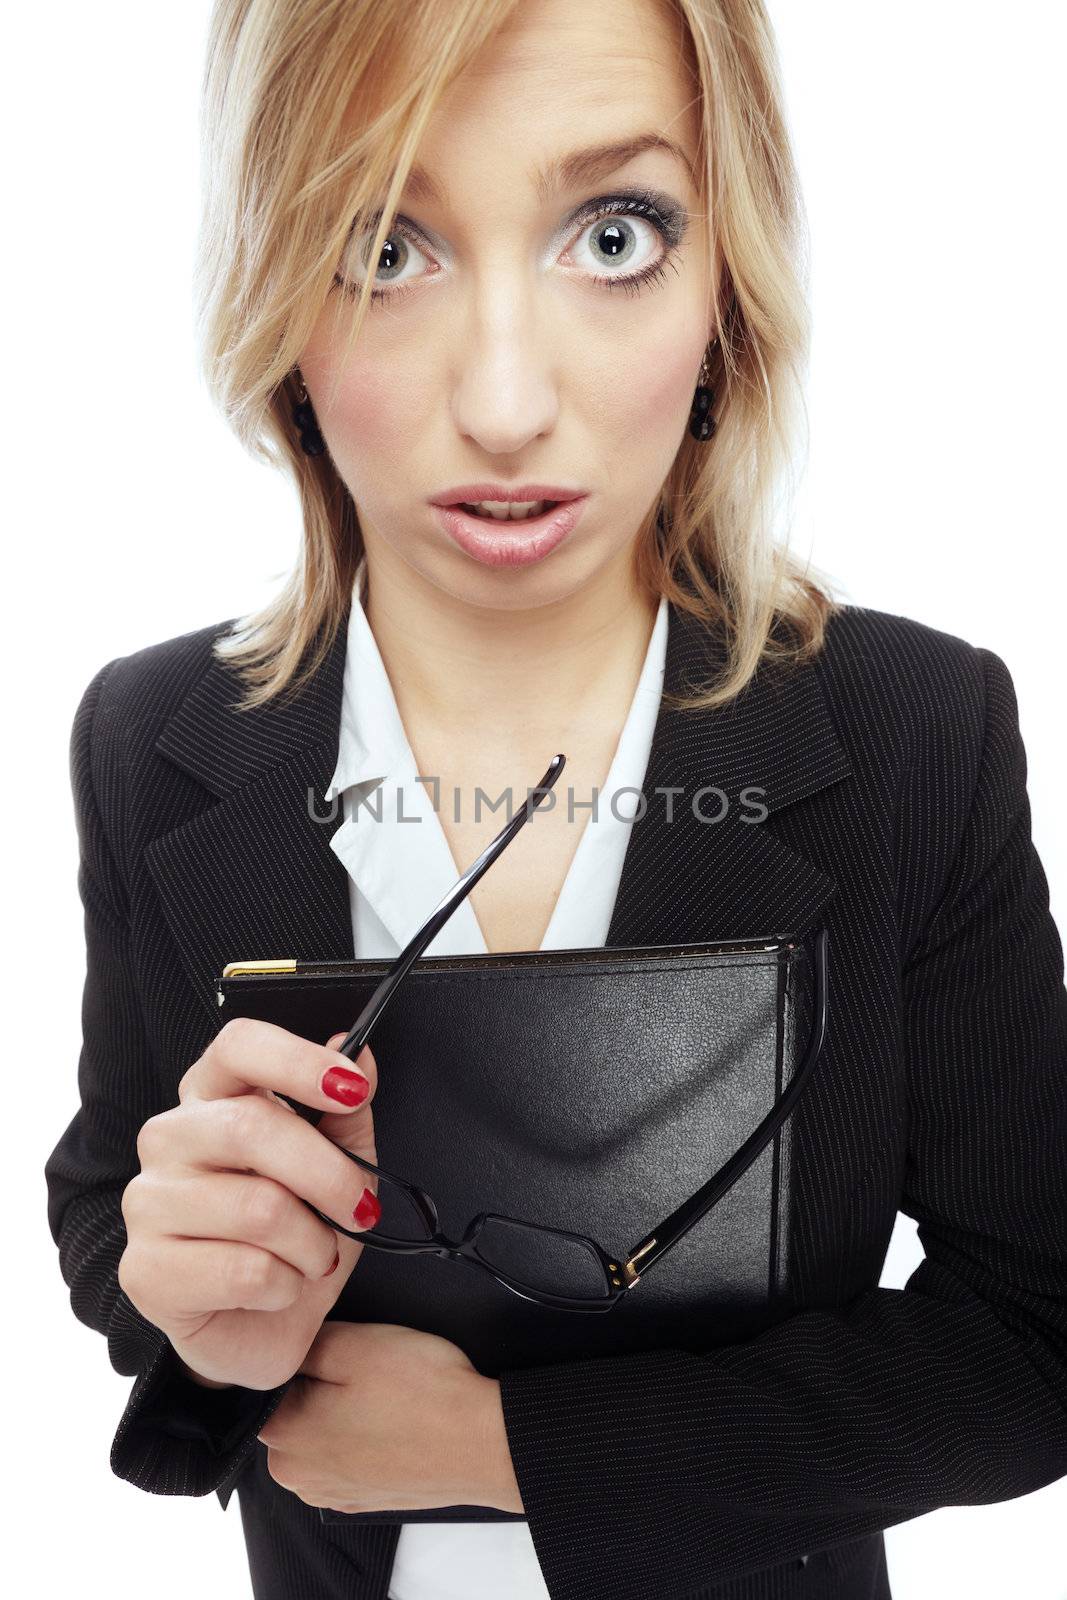 Wide-angle photo of the astonished businesswoman holding folder and eyeglasses